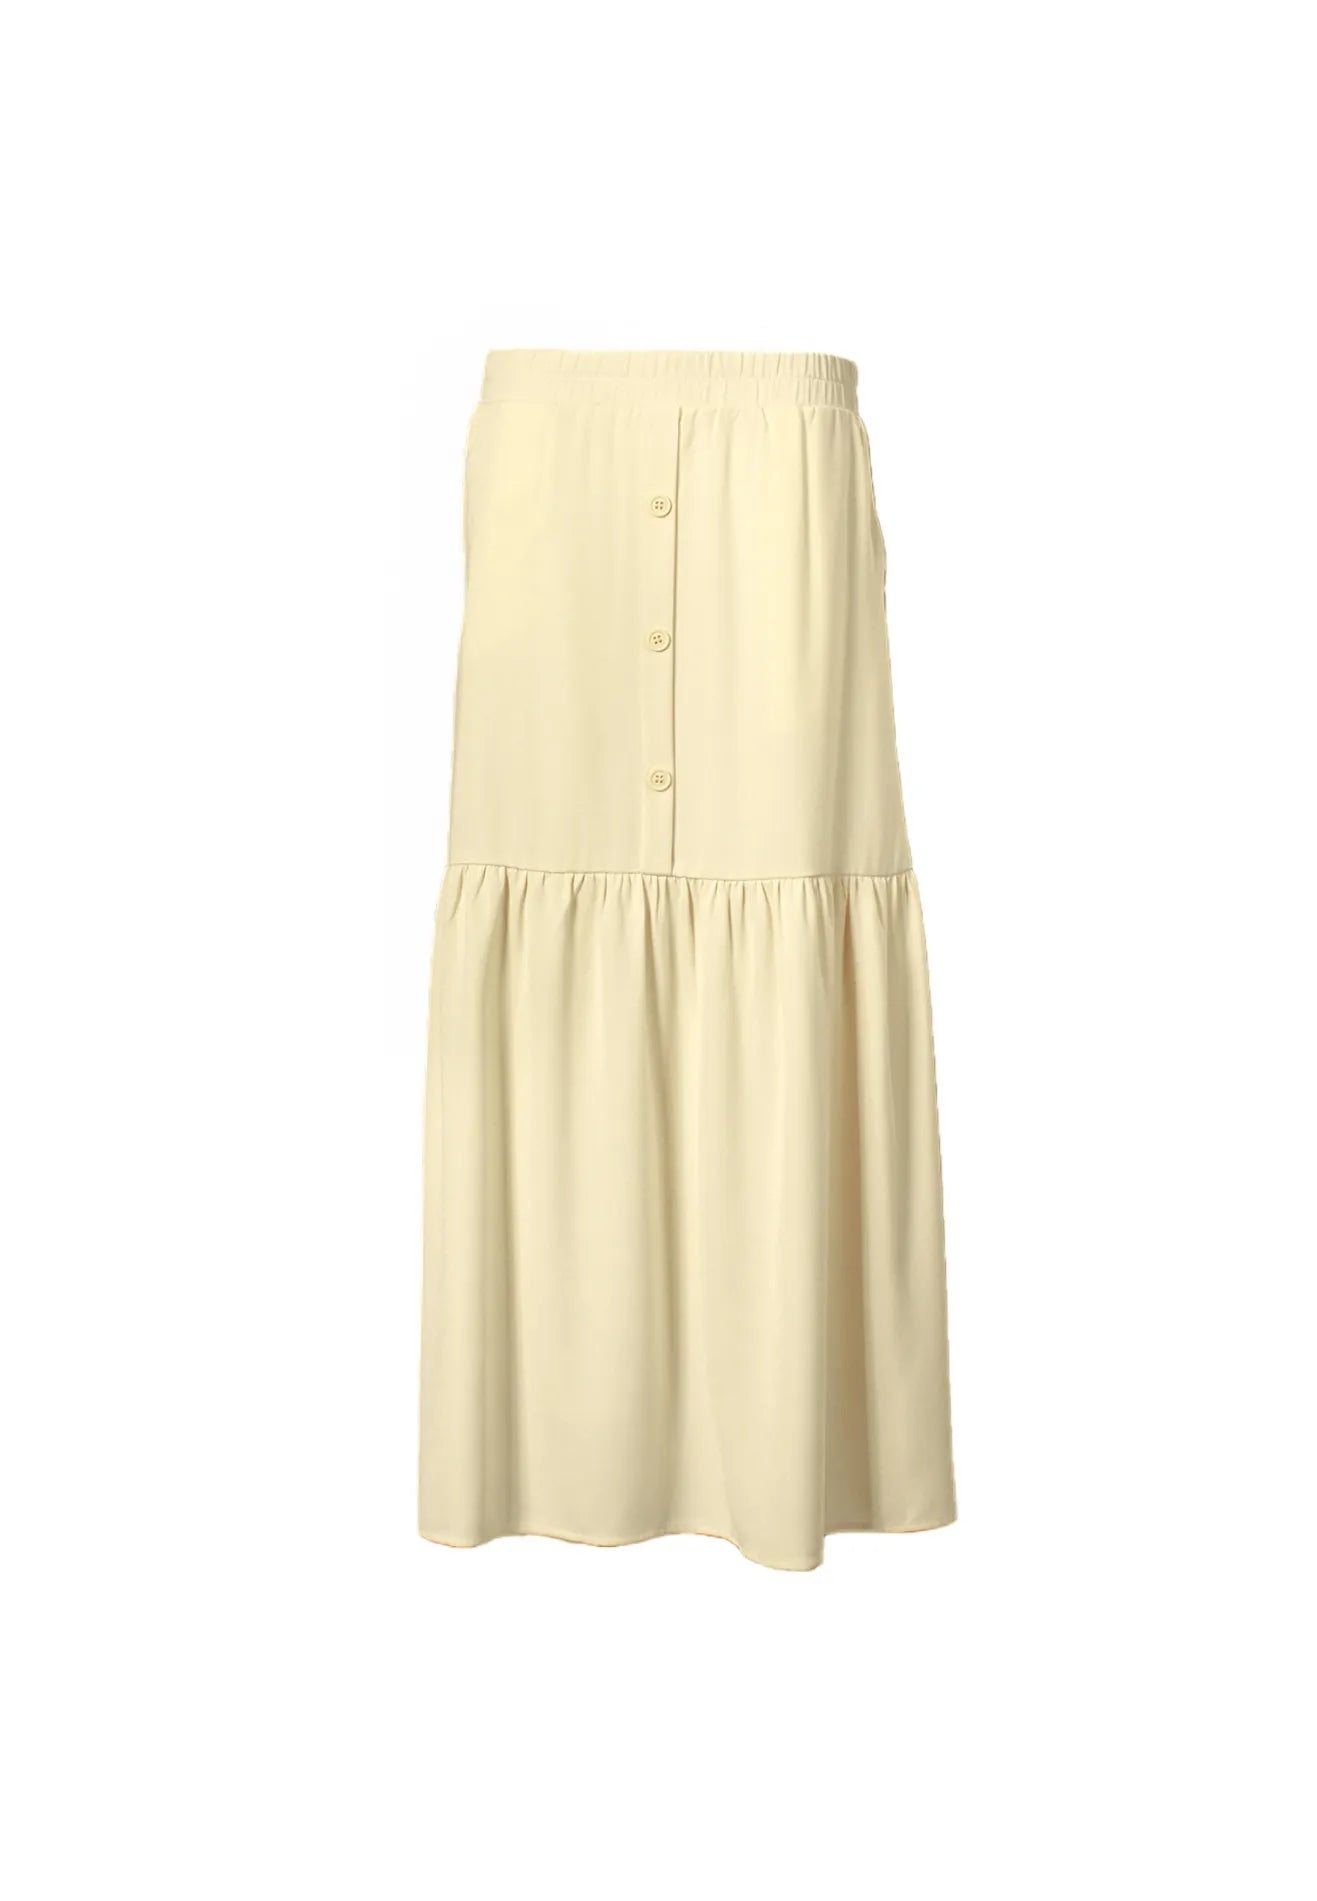 DAISY By VOIR Pocketed Front Button Peplum Maxi Skirt